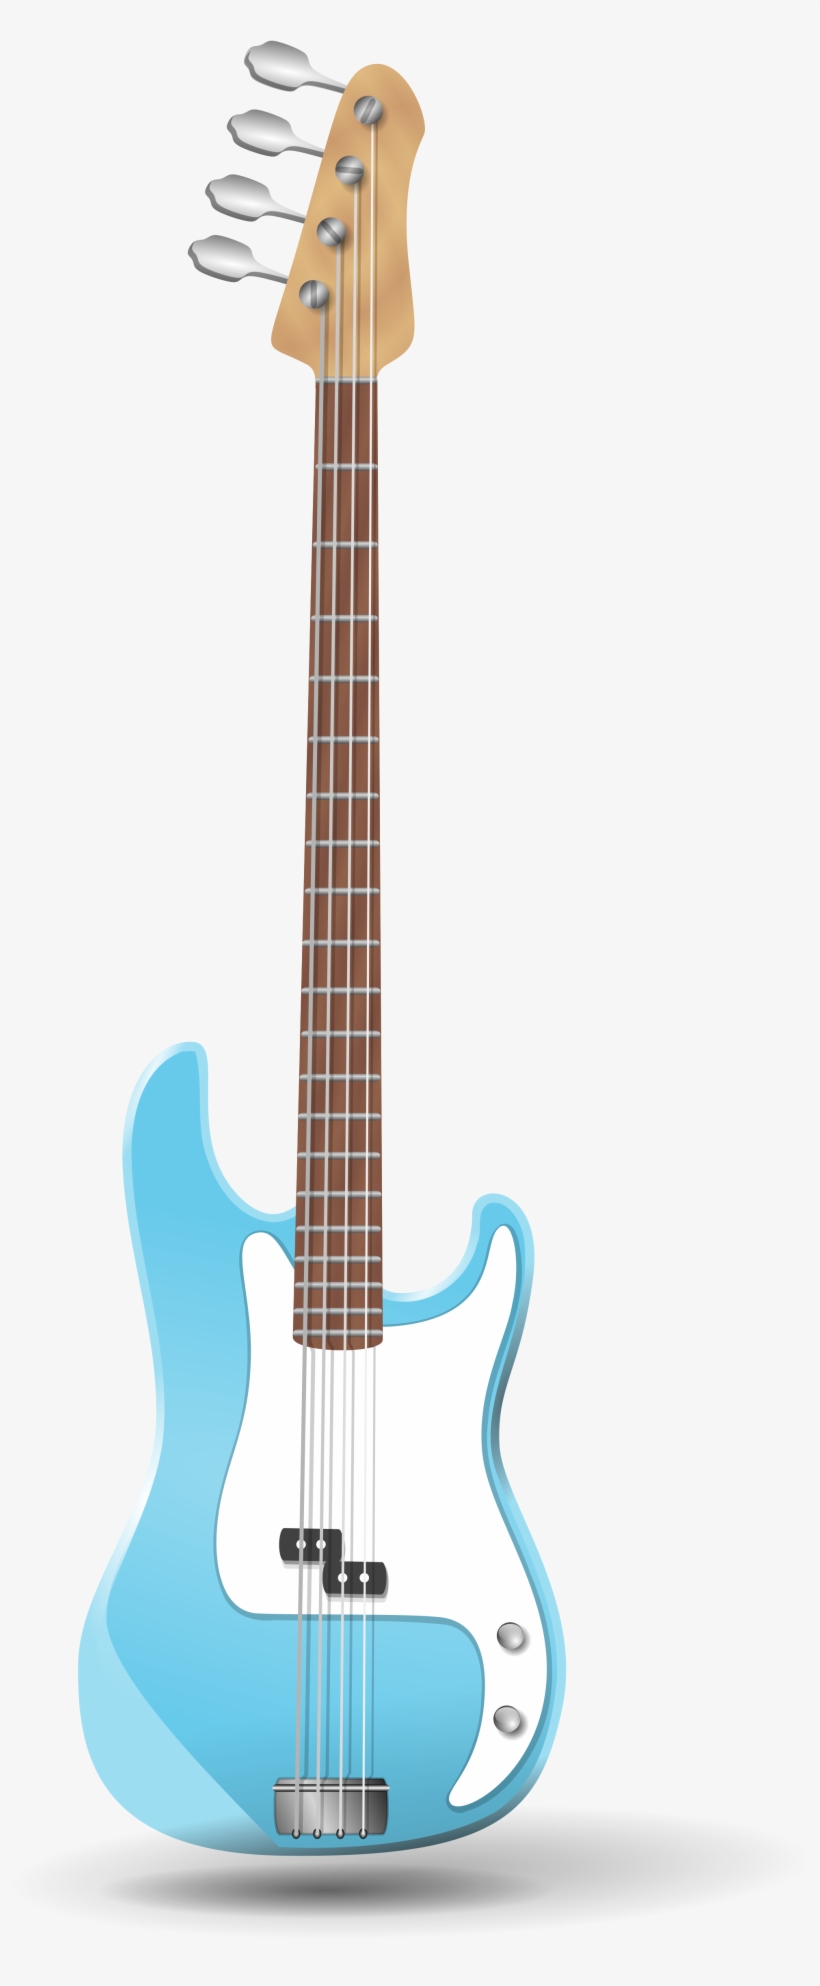 Clipart Guitar Bass Guitar - Transparent Background Bass Guitar Clip Art Jpeg, transparent png #27294